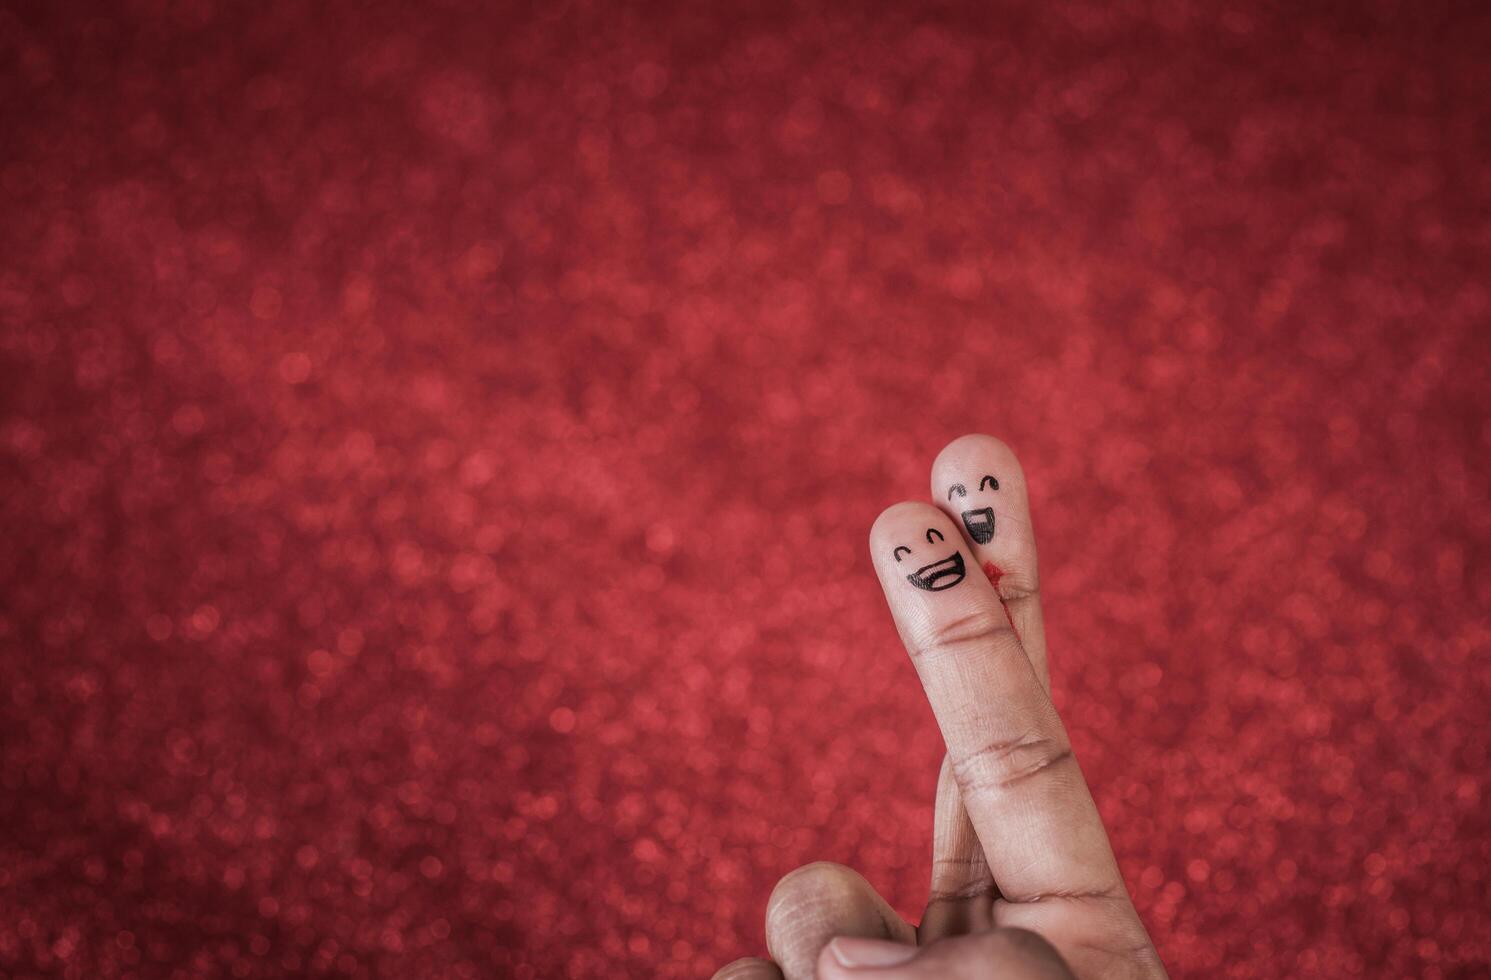 finger med känslor på röd bakgrund. foto